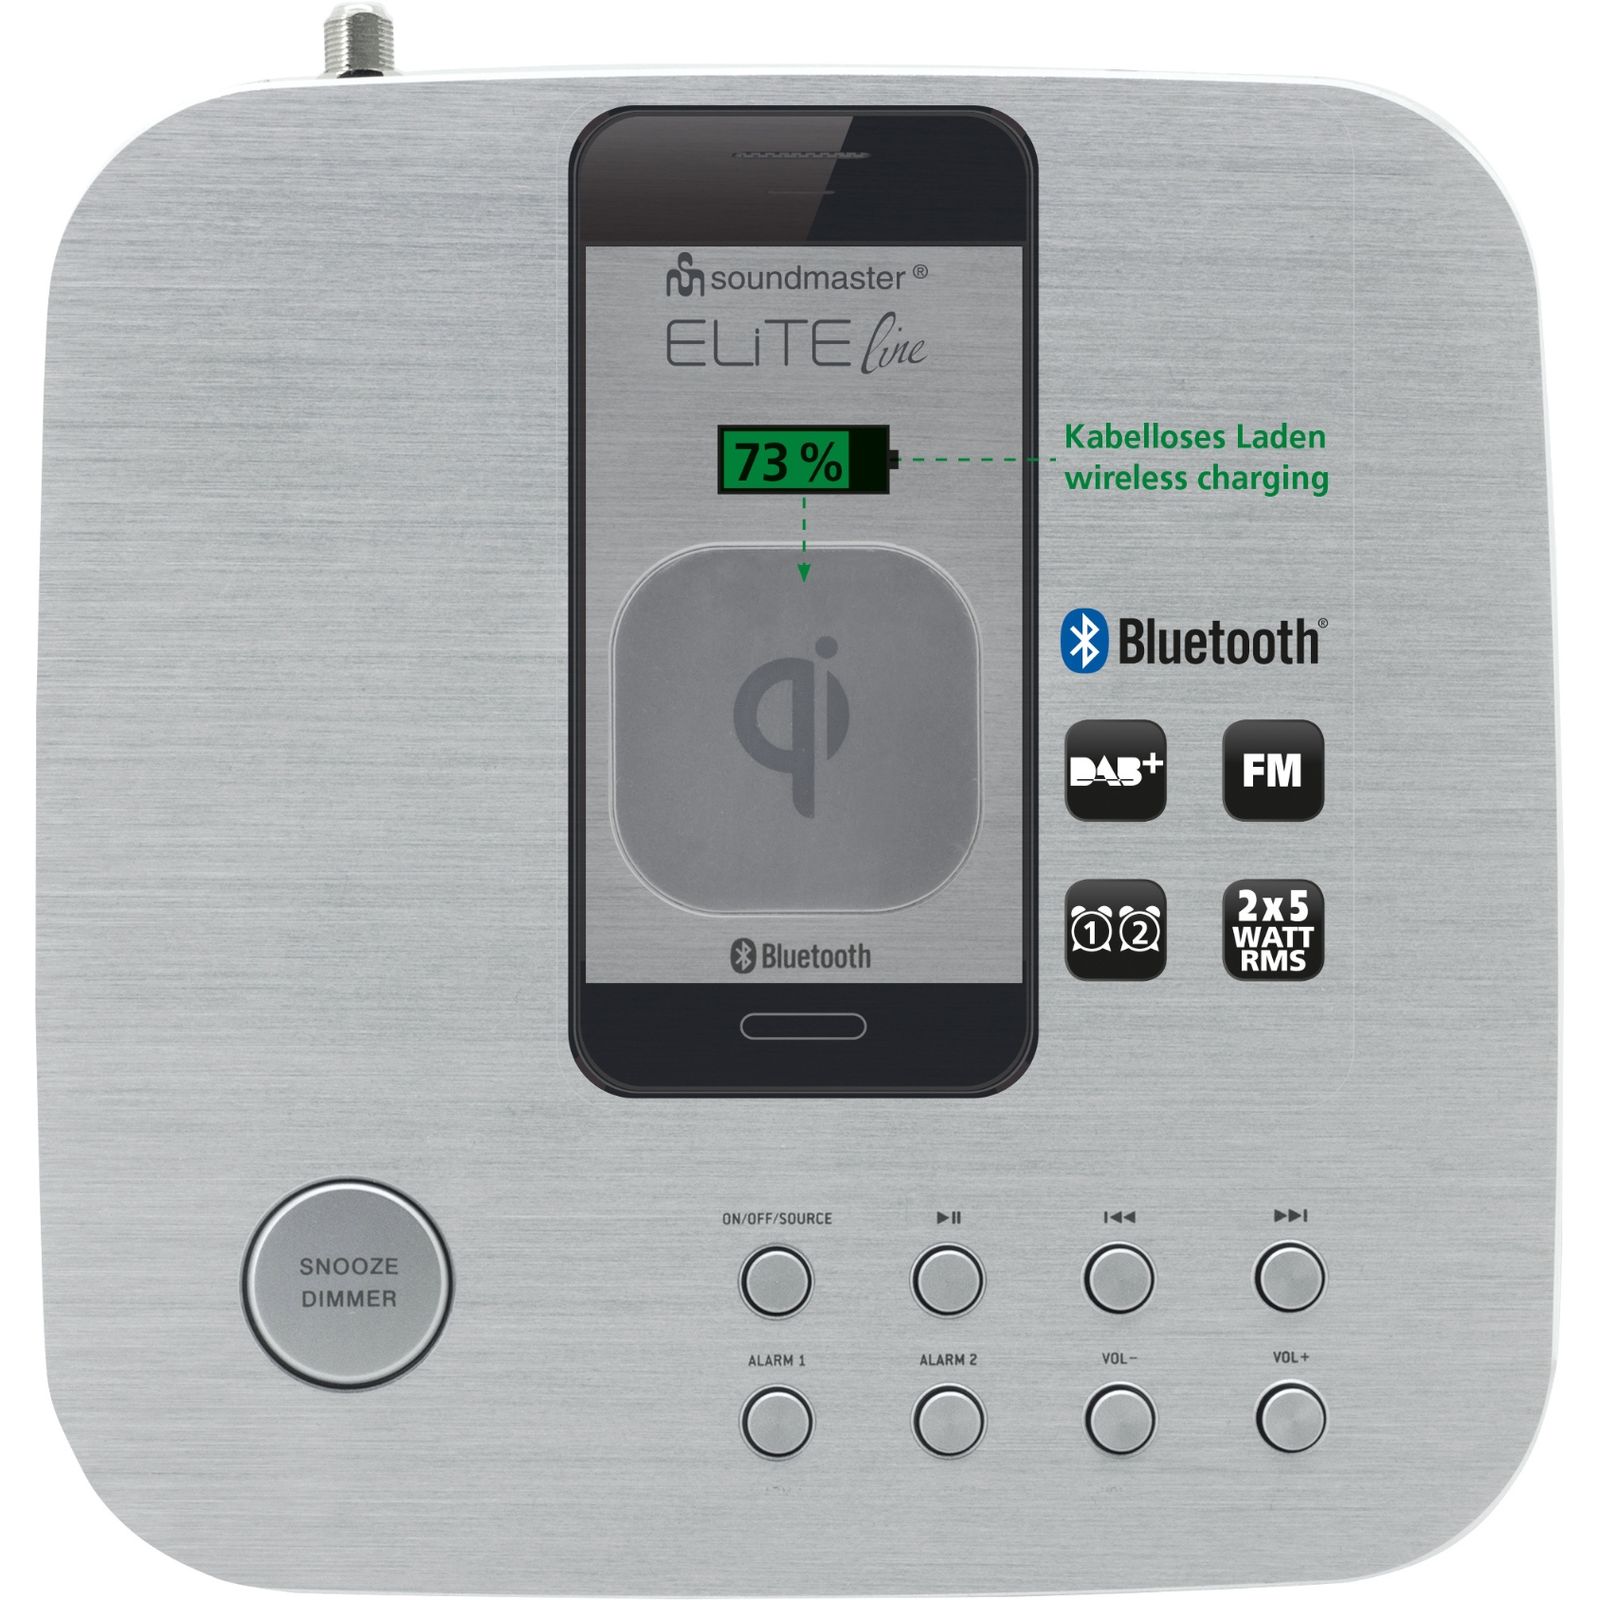 Soundmaster EliteLine UR411SI Radiowecker Uhrenradio Gangreserve DAB+ UKW USB AUX Bluetooth Smartphone-Ladefläche Fernbedienung 2x5 Watt RMS